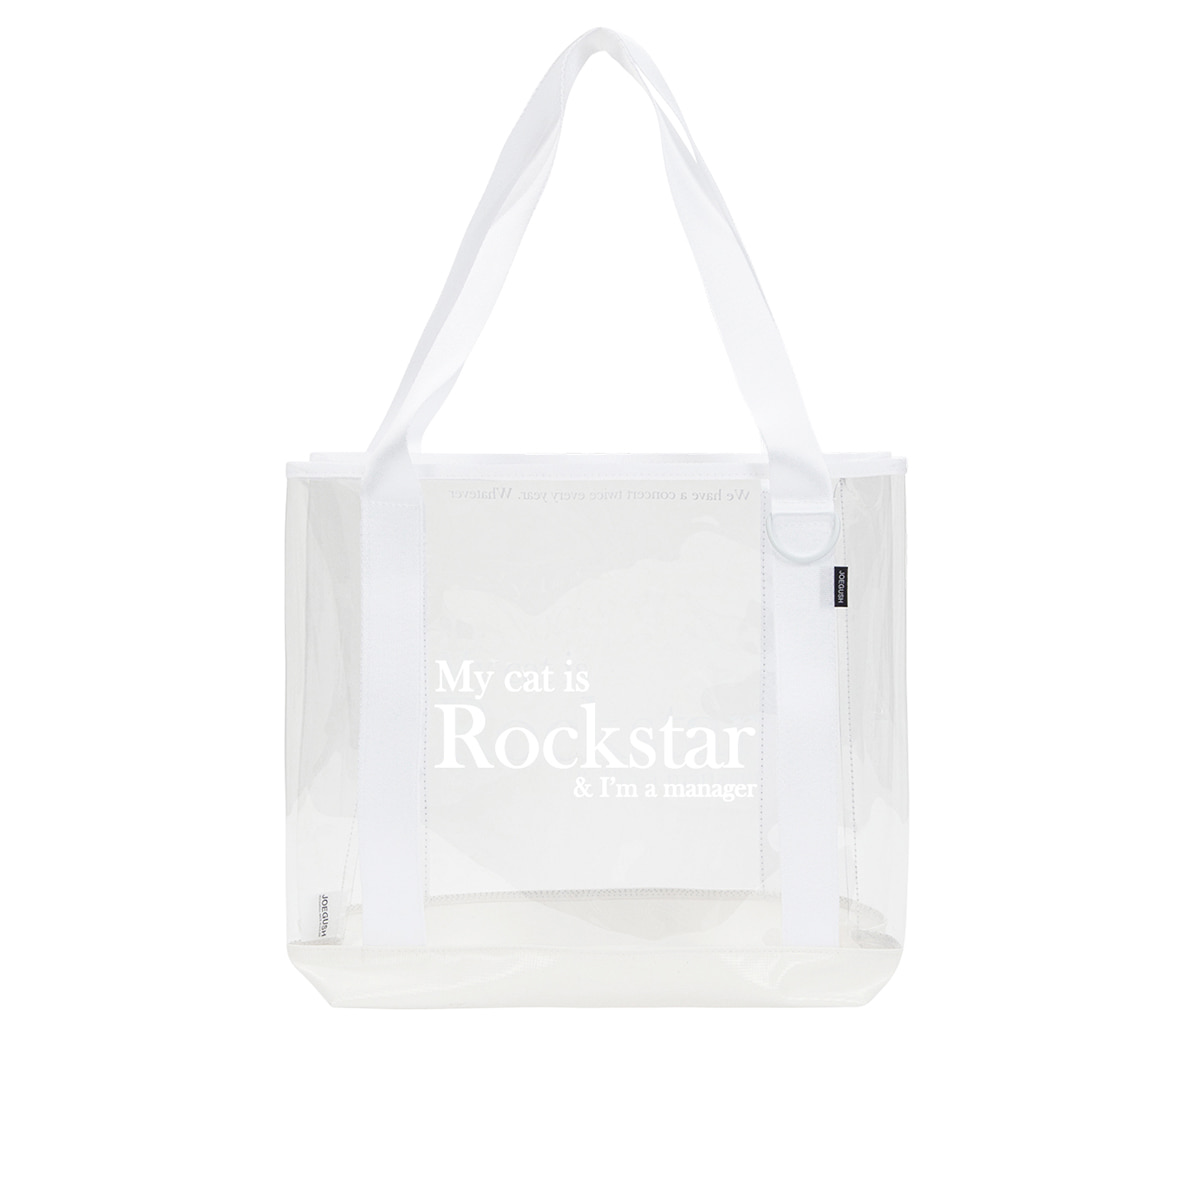 Rockstar pvc tote bag (White/White) [Online Exclusive]